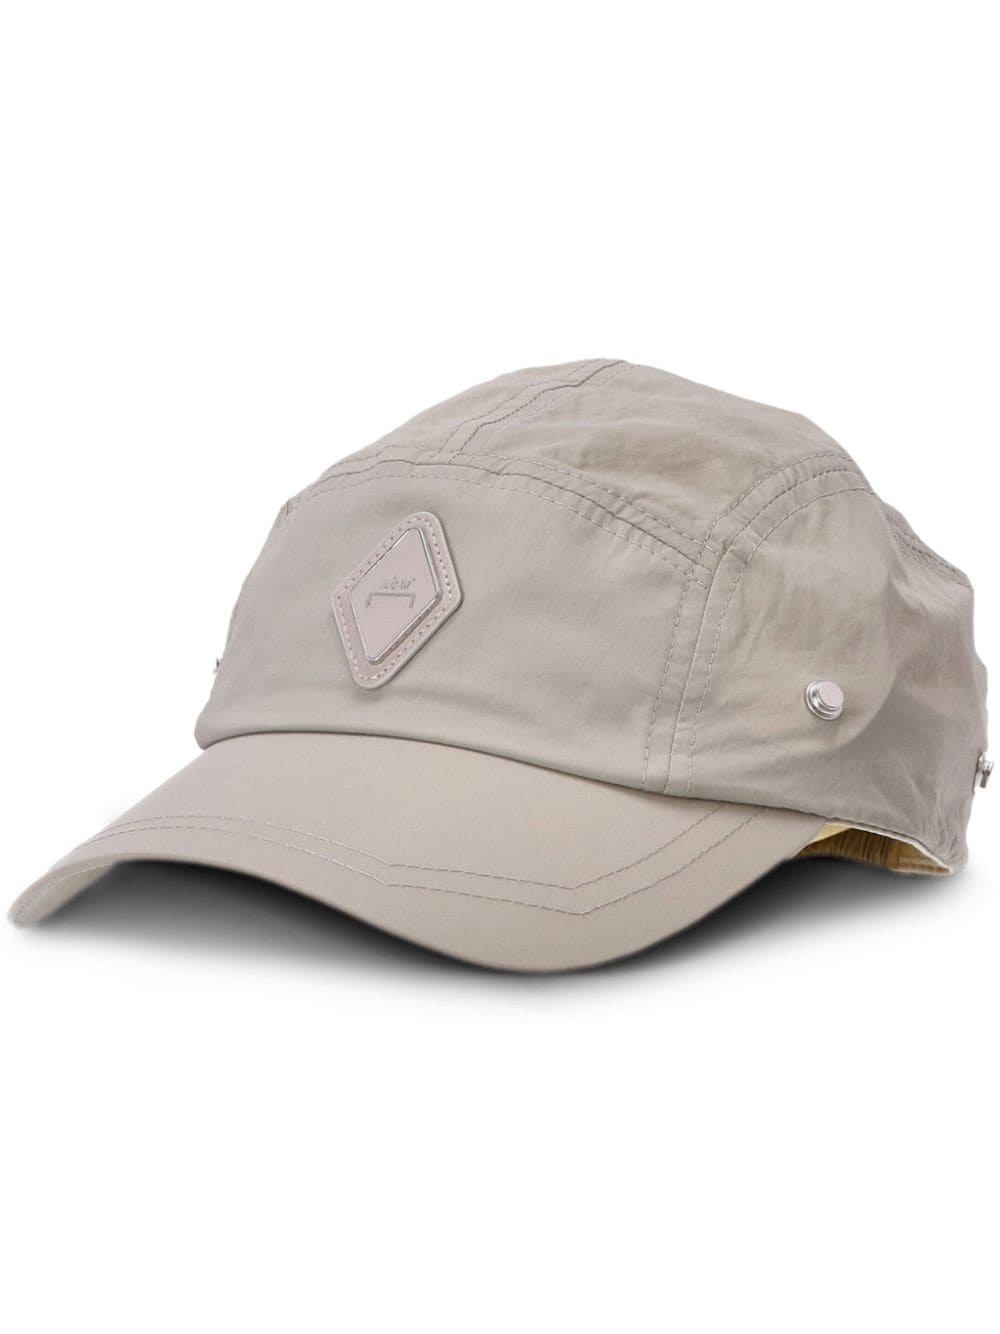 Diamond hooded cap - 1